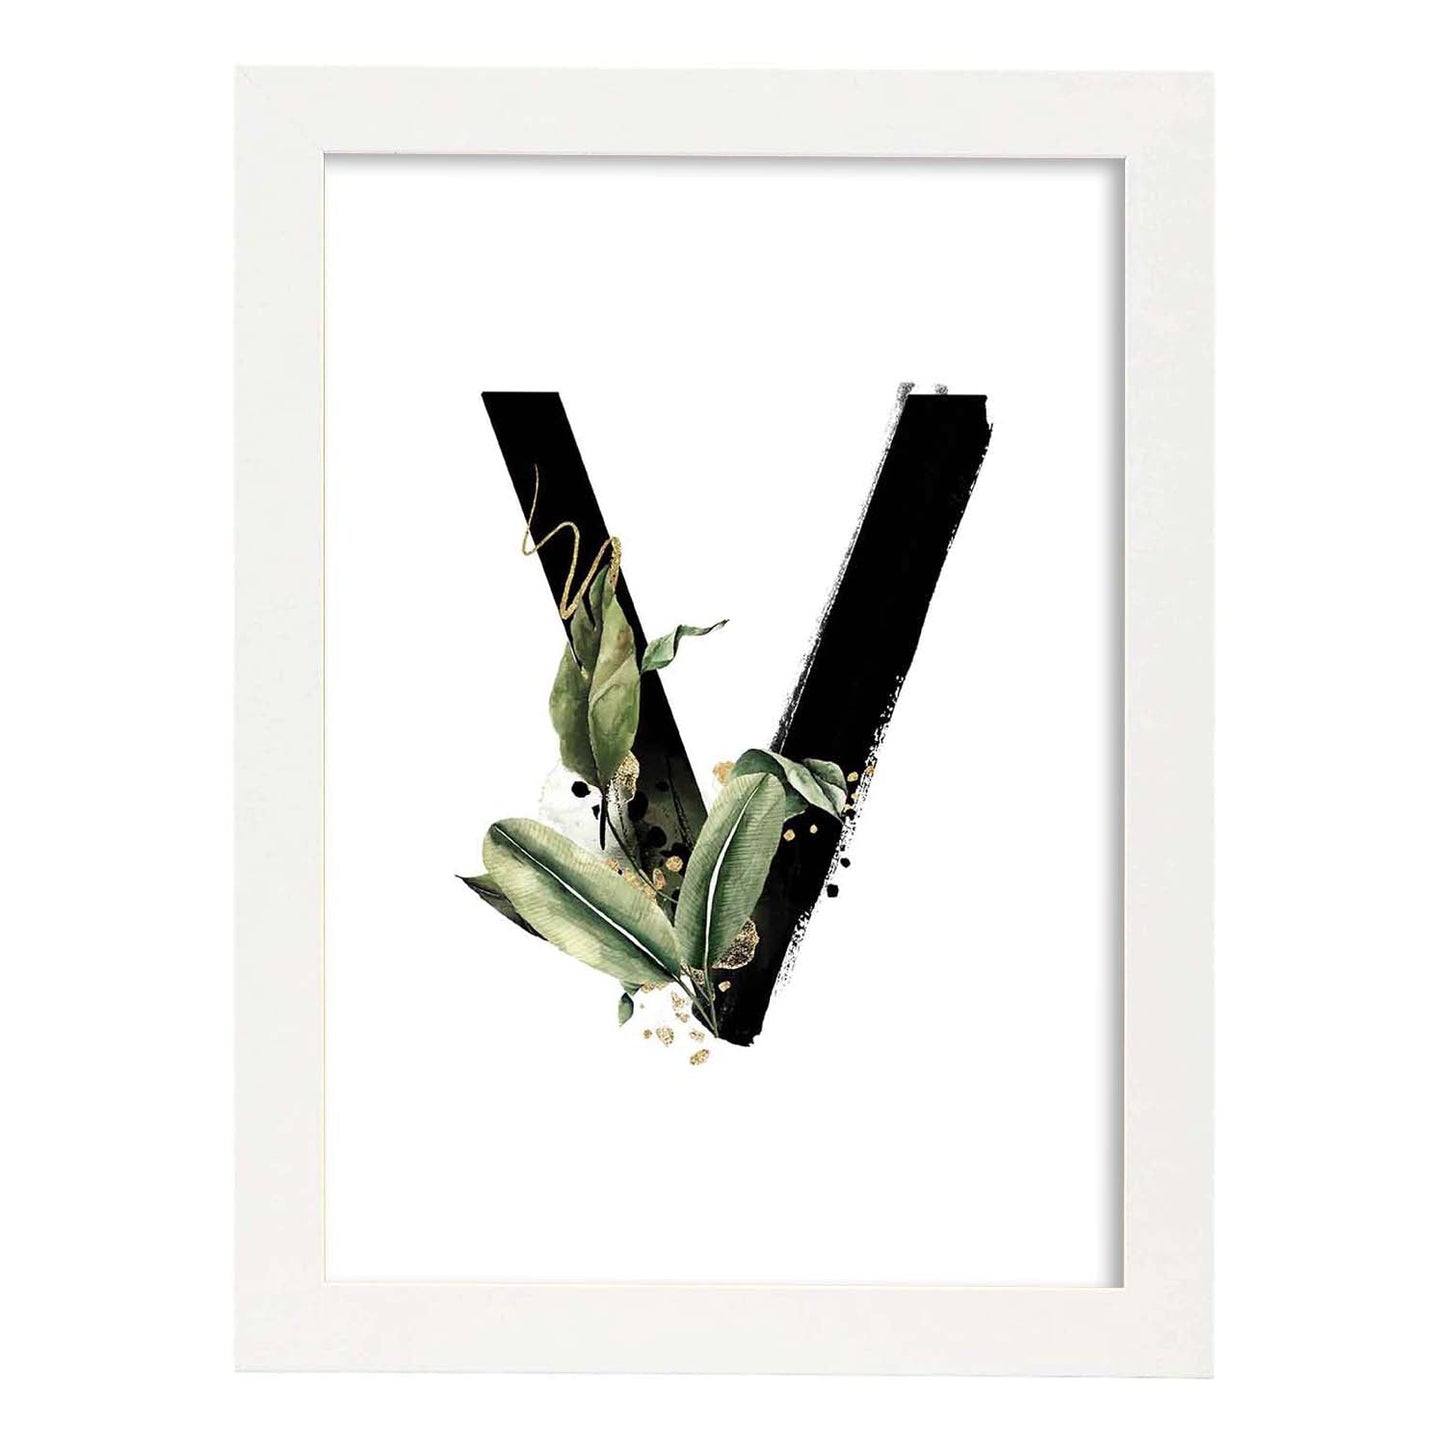 Poster de letra V. Lámina estilo Jungla Negra con imágenes del alfabeto.-Artwork-Nacnic-A4-Marco Blanco-Nacnic Estudio SL